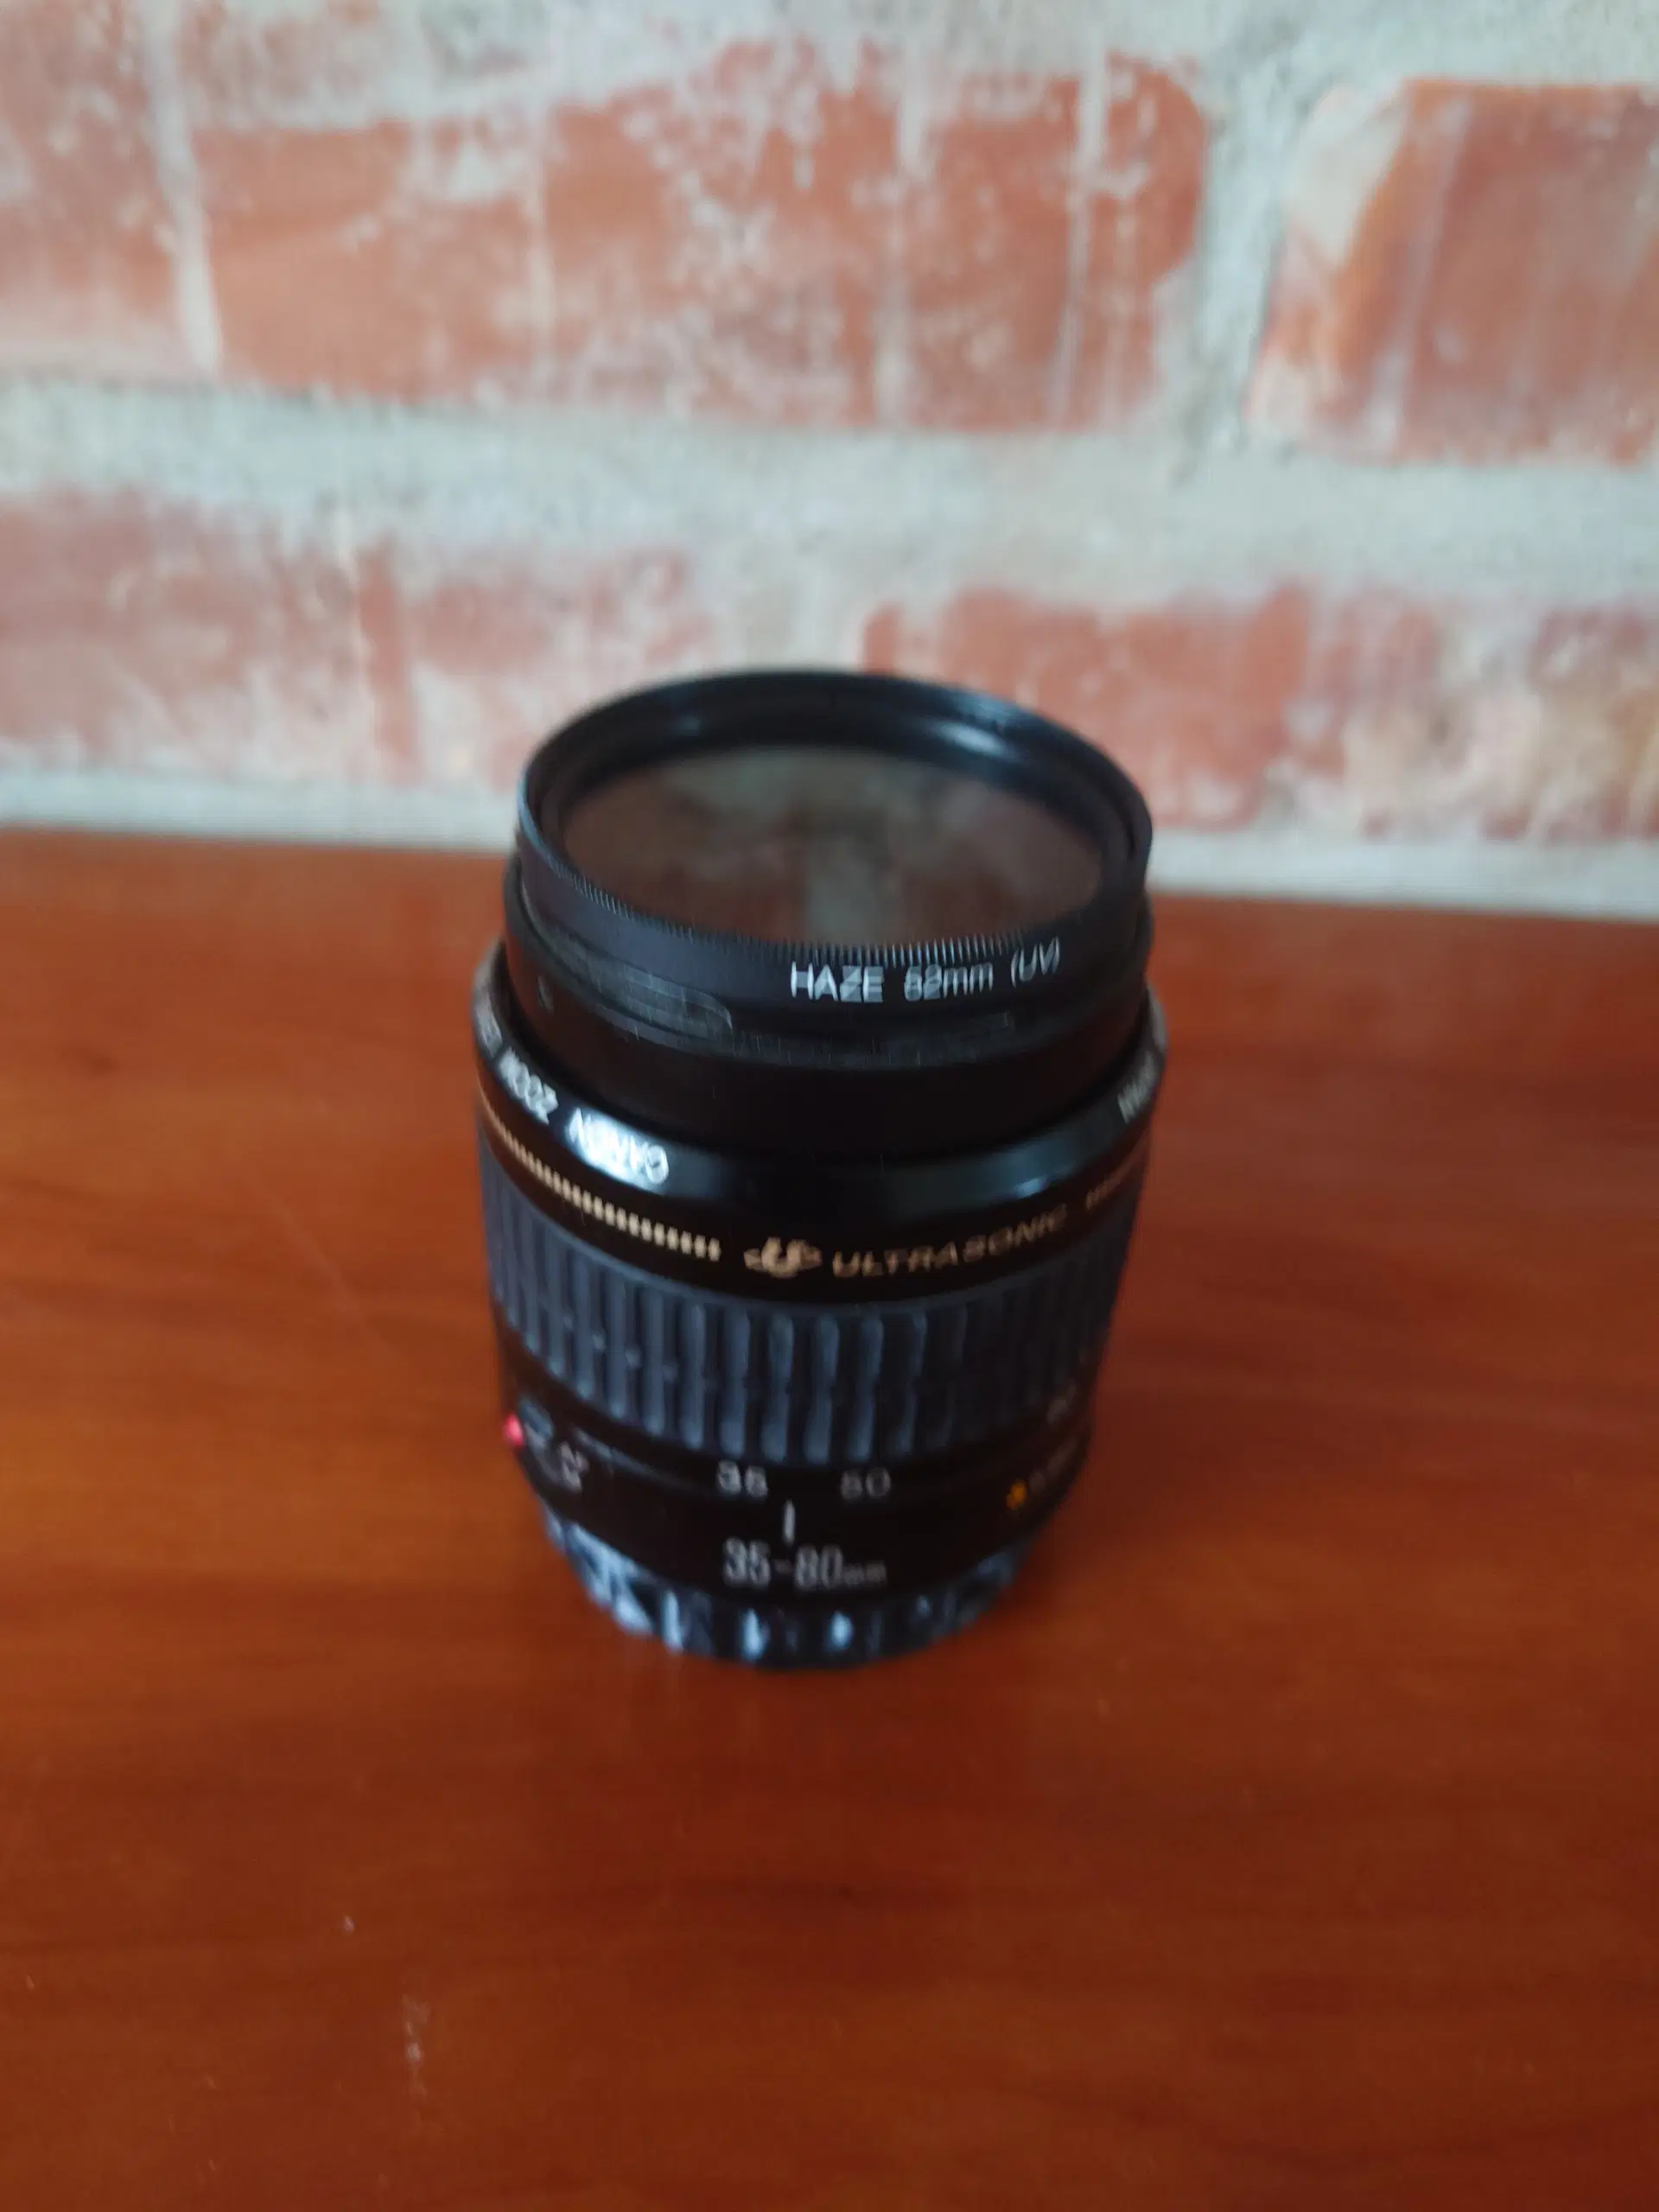 Canon Zoom Lens EF 35-80mm 1: 4-56 Ultrasonic